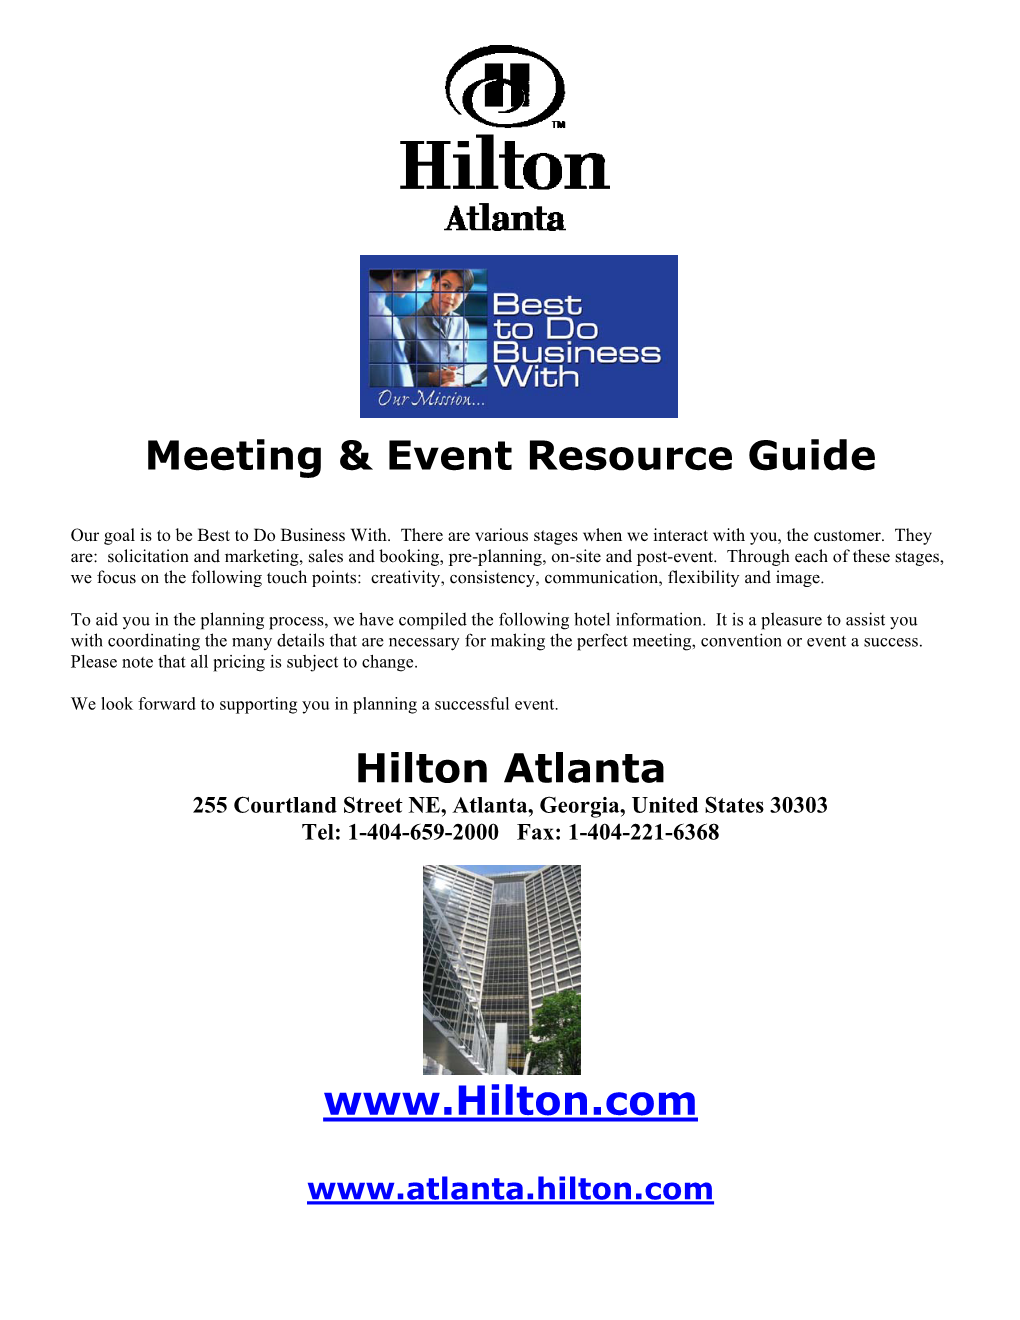 Hilton Atlanta 255 Courtland Street NE, Atlanta, Georgia, United States 30303 Tel: 1-404-659-2000 Fax: 1-404-221-6368